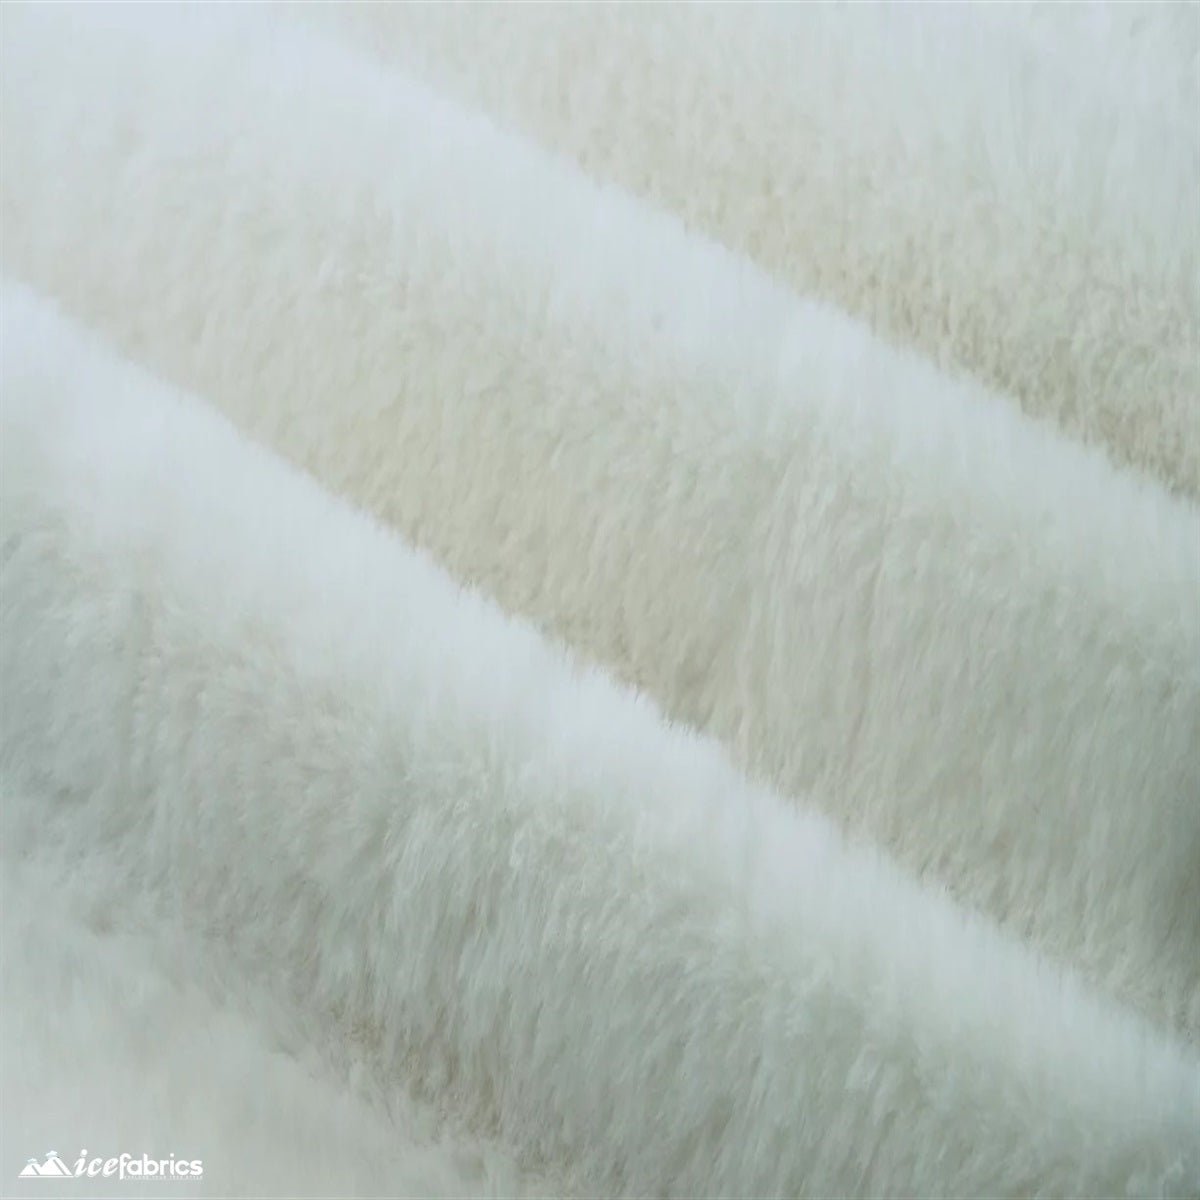 Bunny Thick Faux Fur Minky Fabric / Short Pile / Super SoftICE FABRICSICE FABRICSWhiteBy The Yard (60 inches Wide)Bunny Thick Faux Fur Minky Fabric / Short Pile / Super Soft ICE FABRICS White